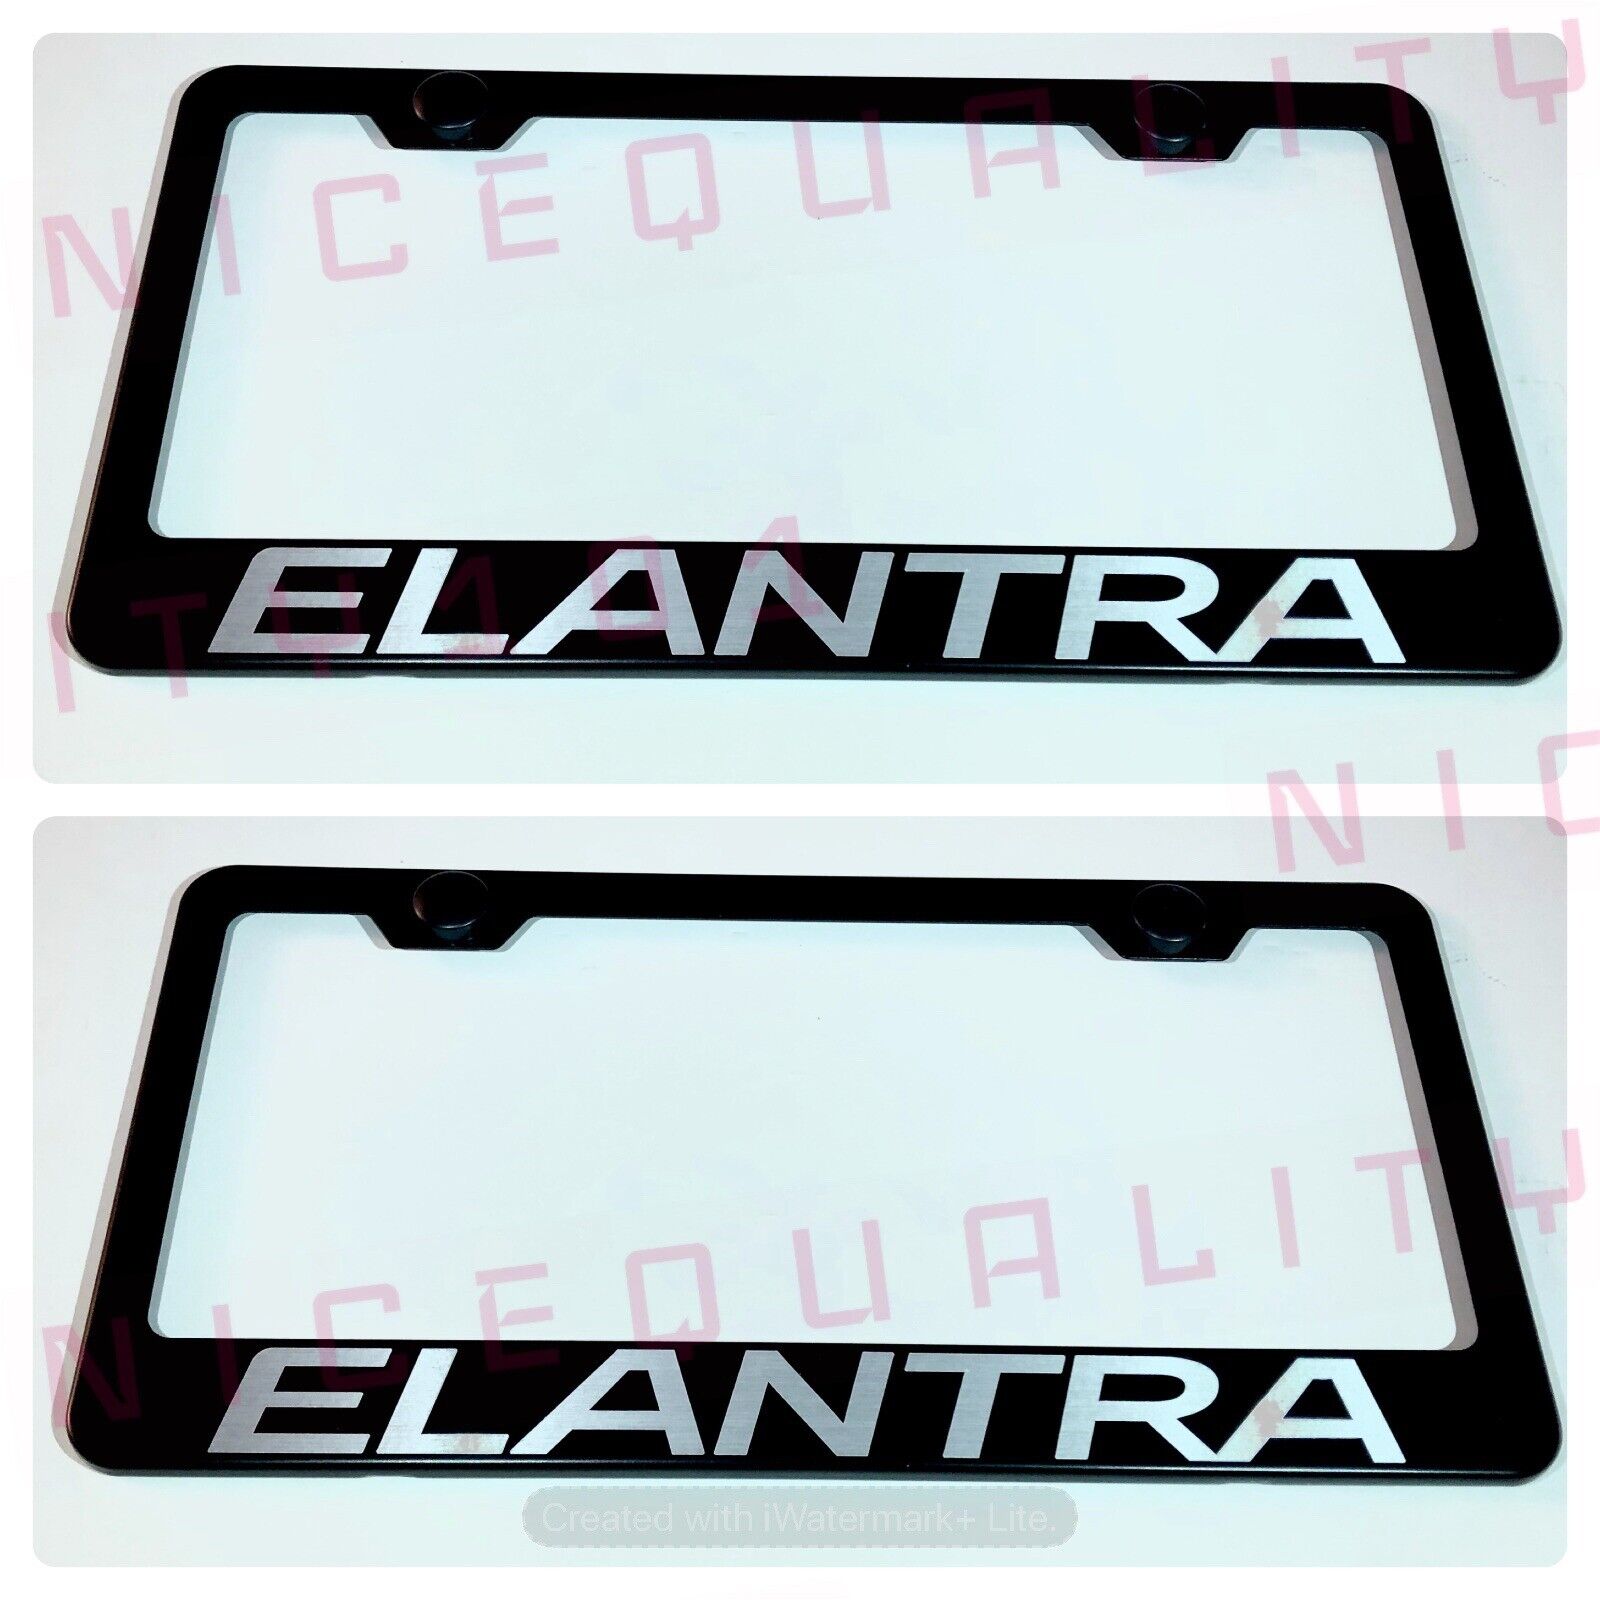 2X Elantra Stainless Steel Black Finished License Plate Frame Holder